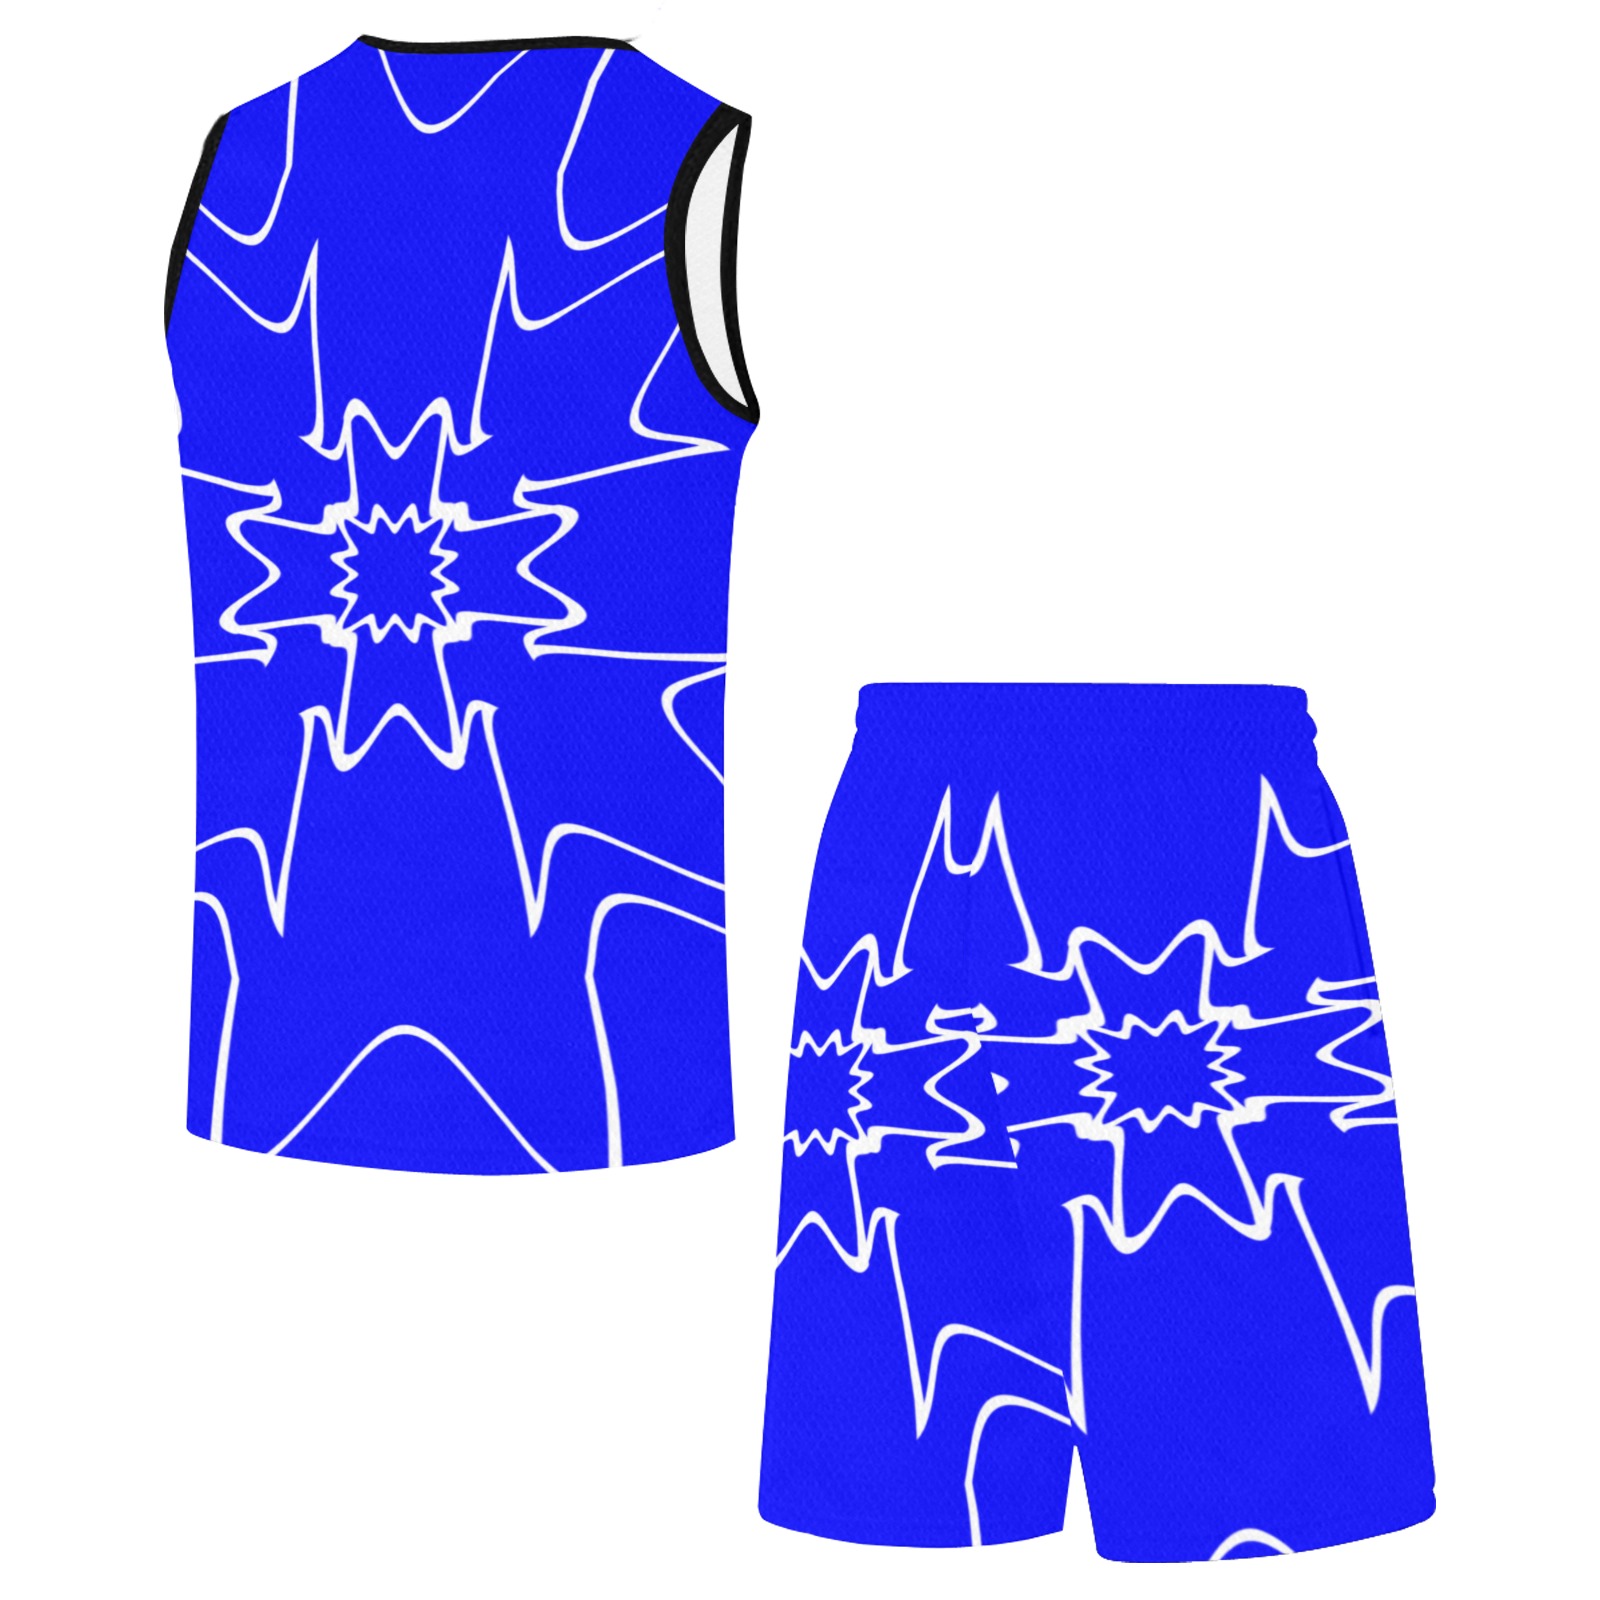 White InterlockingCrosses Starred Blue Basketball Uniform with Pocket